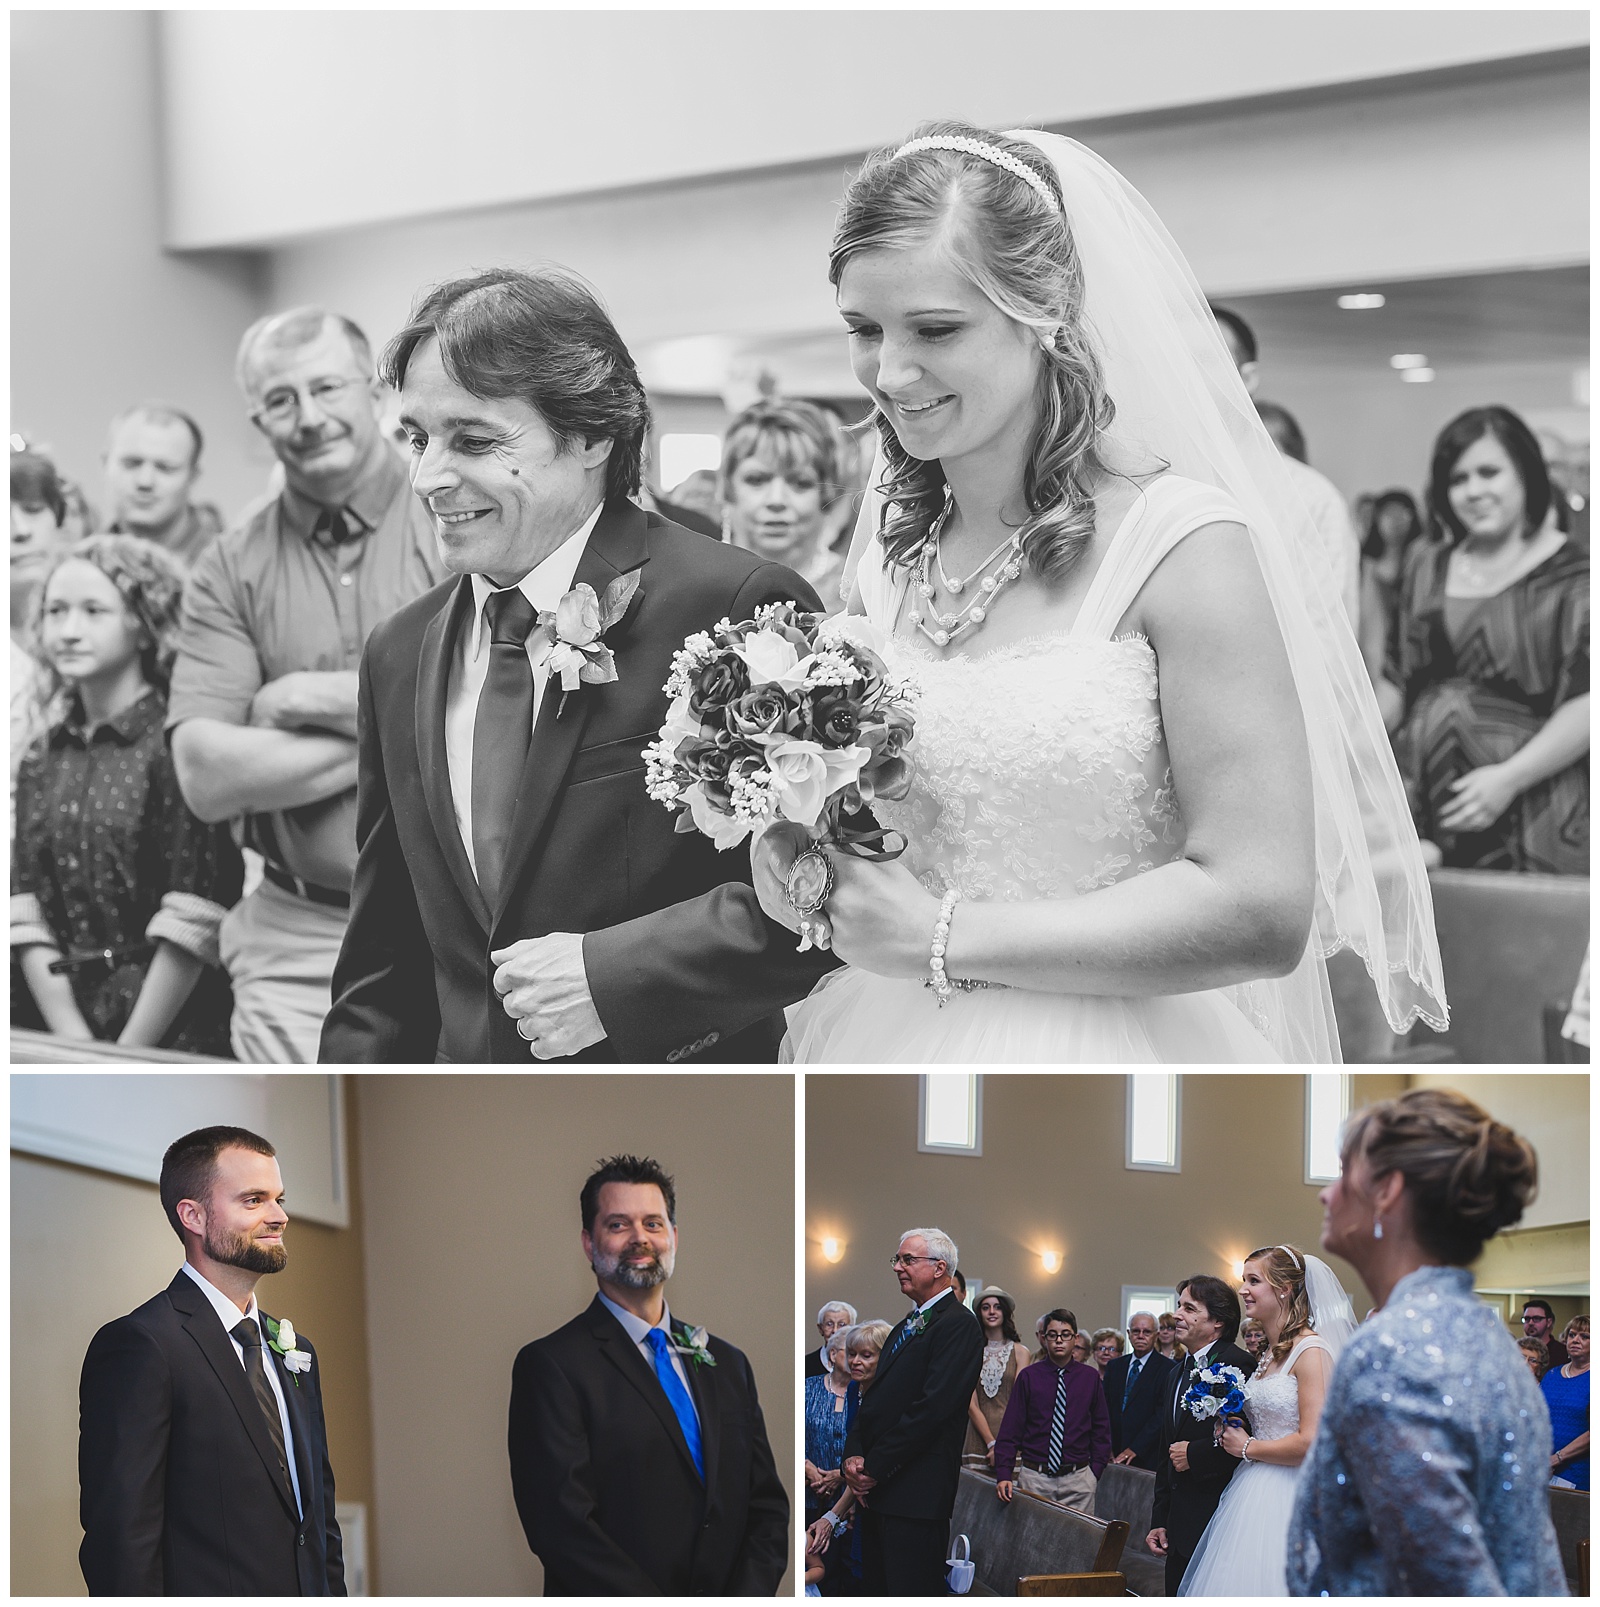 Wedding photography at South Knollwood Baptist Church in Topeka, Kansas.